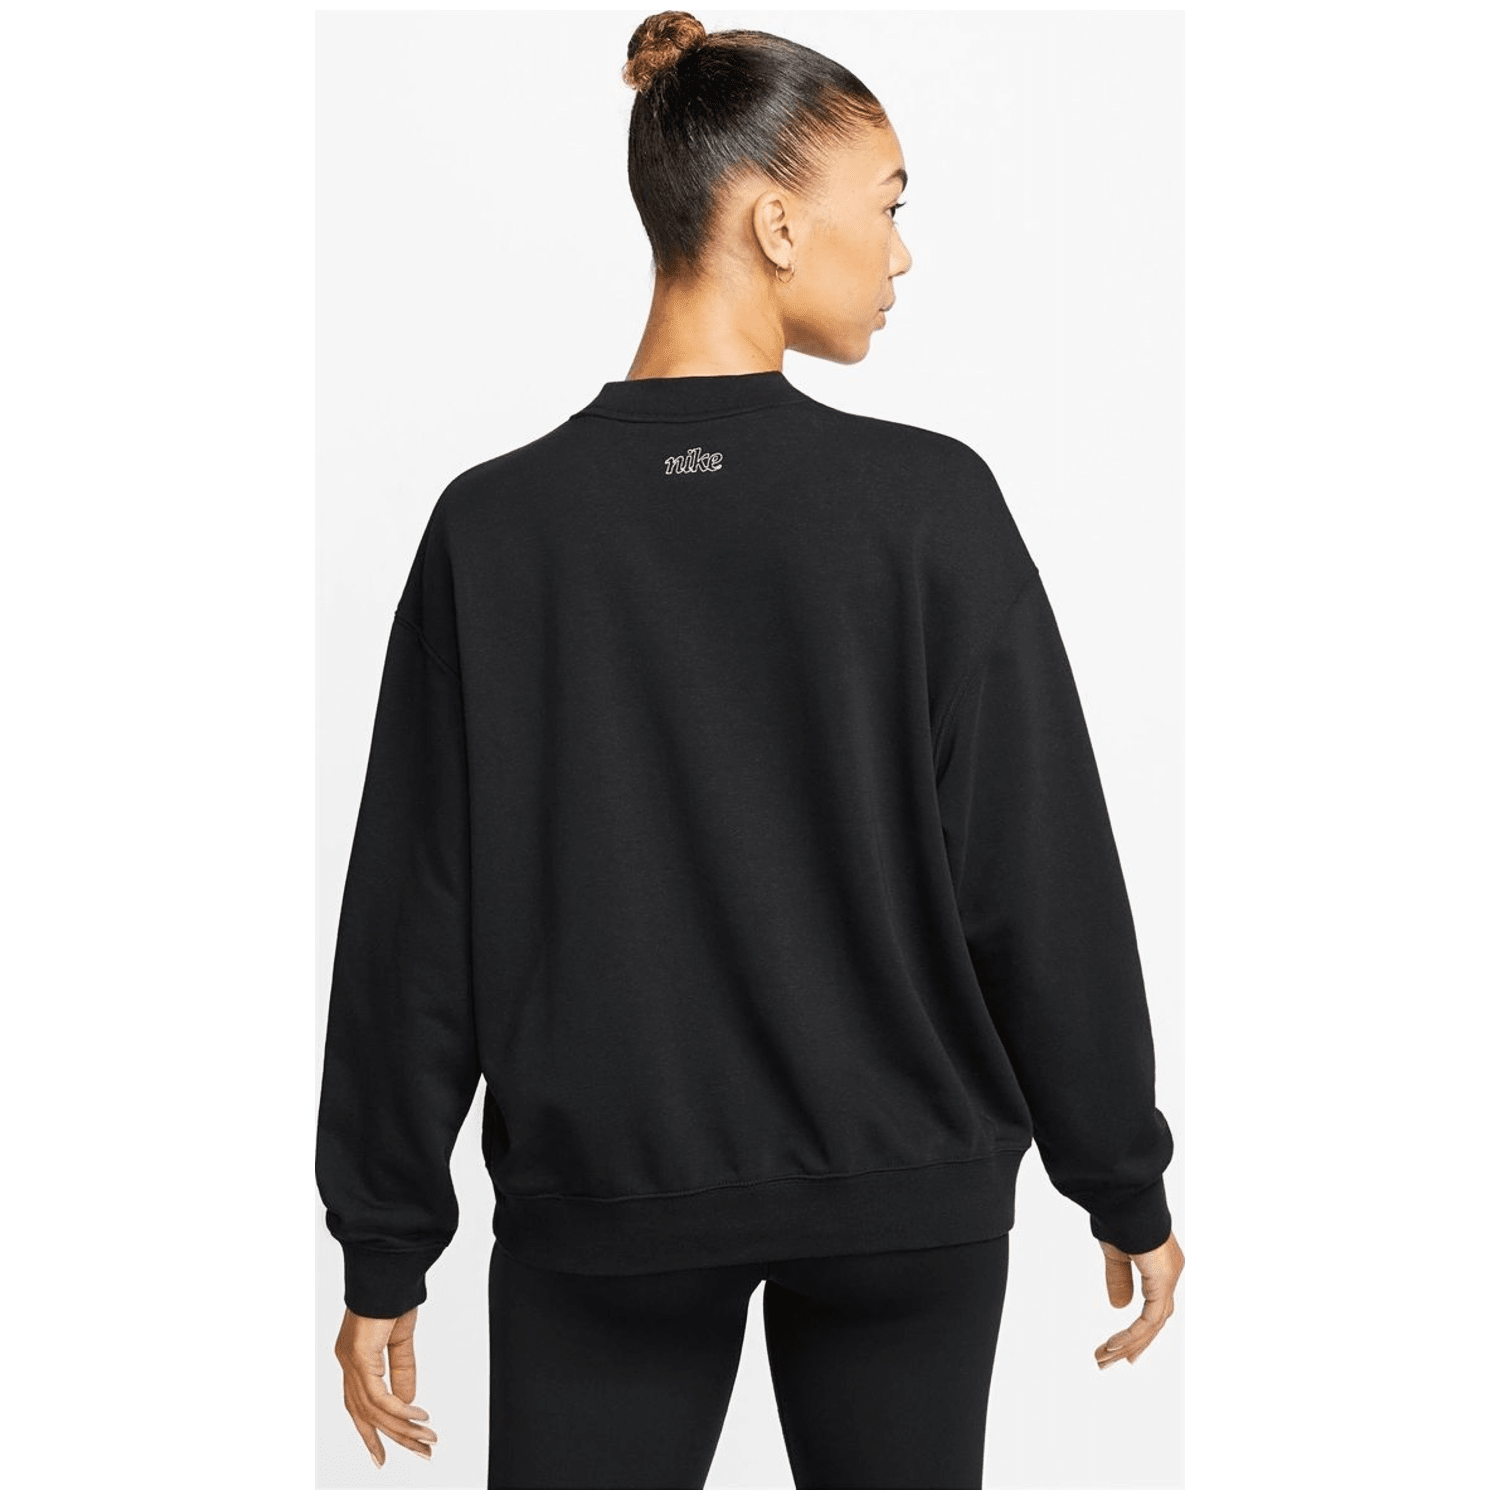 Nike Dri-FIT Get Fit Graphic Crewneck Damen Sweatshirt